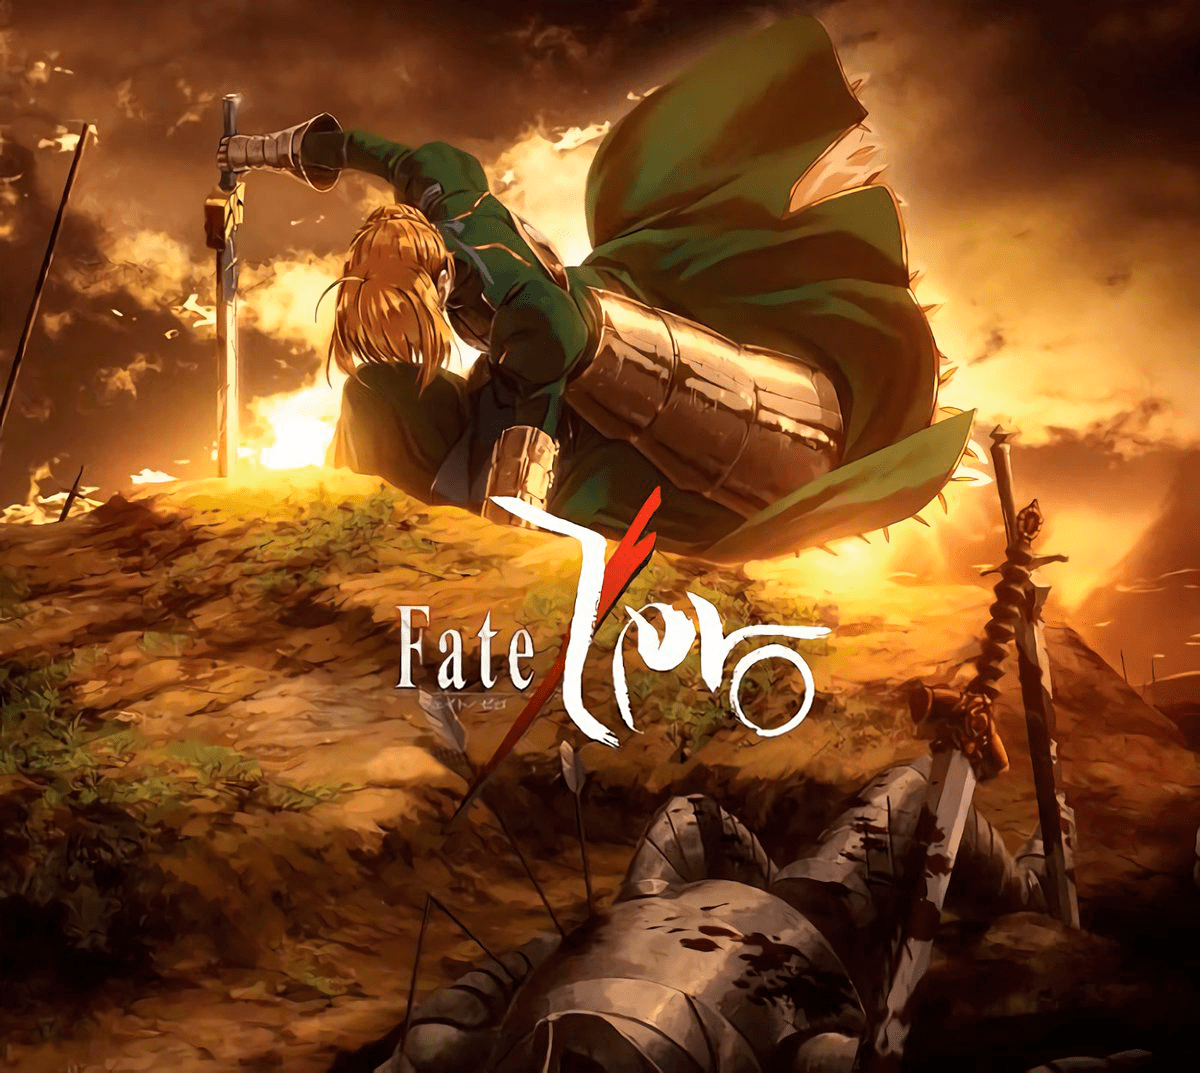 Fate Zero Wallpaper Hd For Pc 4k - Wallpaperforu